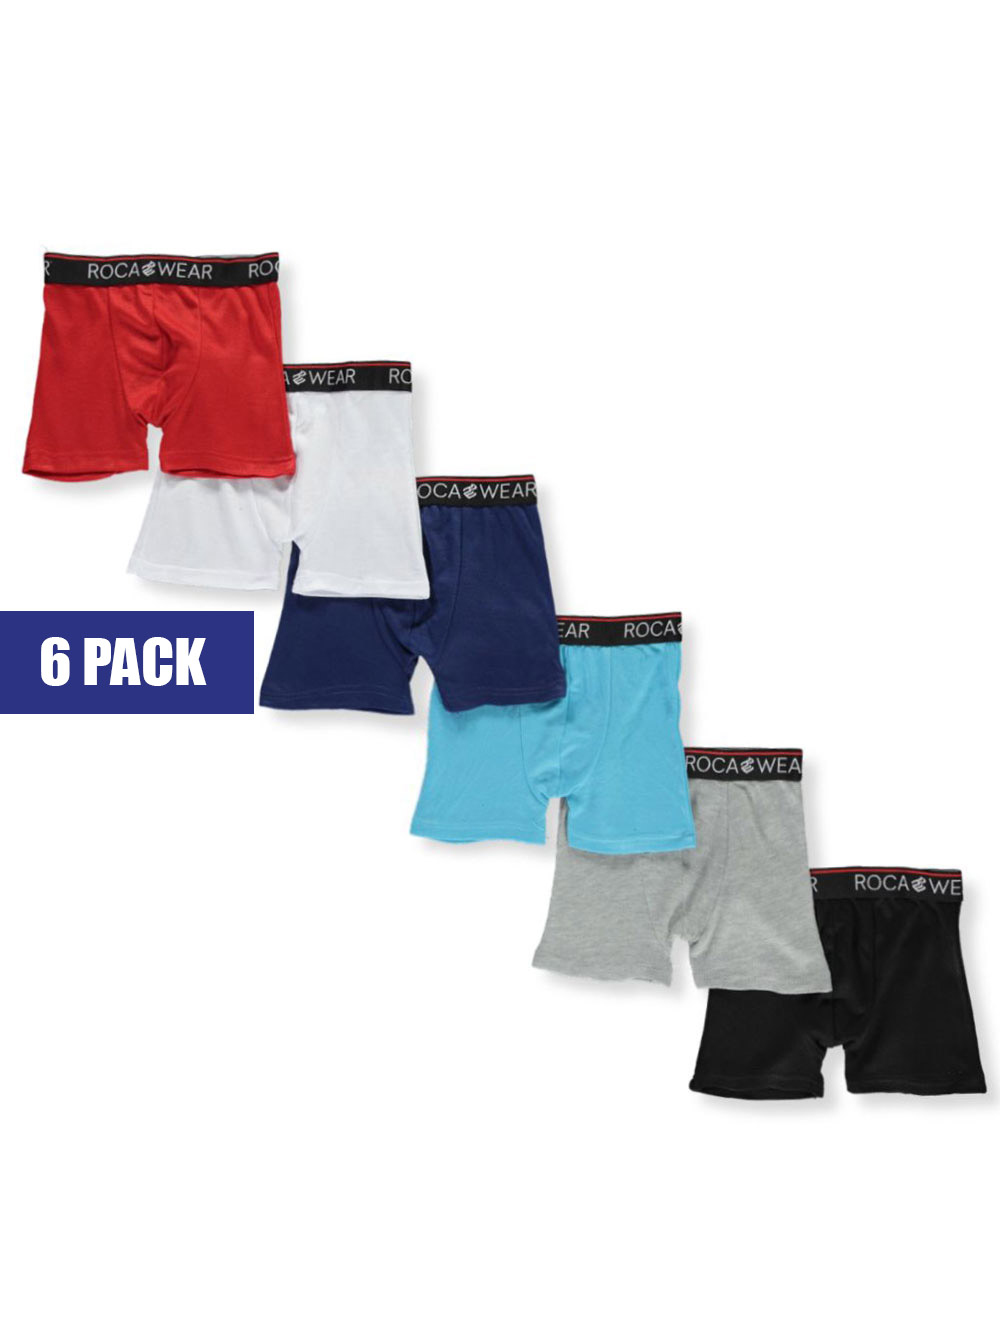 Cars 3 Boys Underwear 8-Pack Sizes 4T, 4, 6, 8